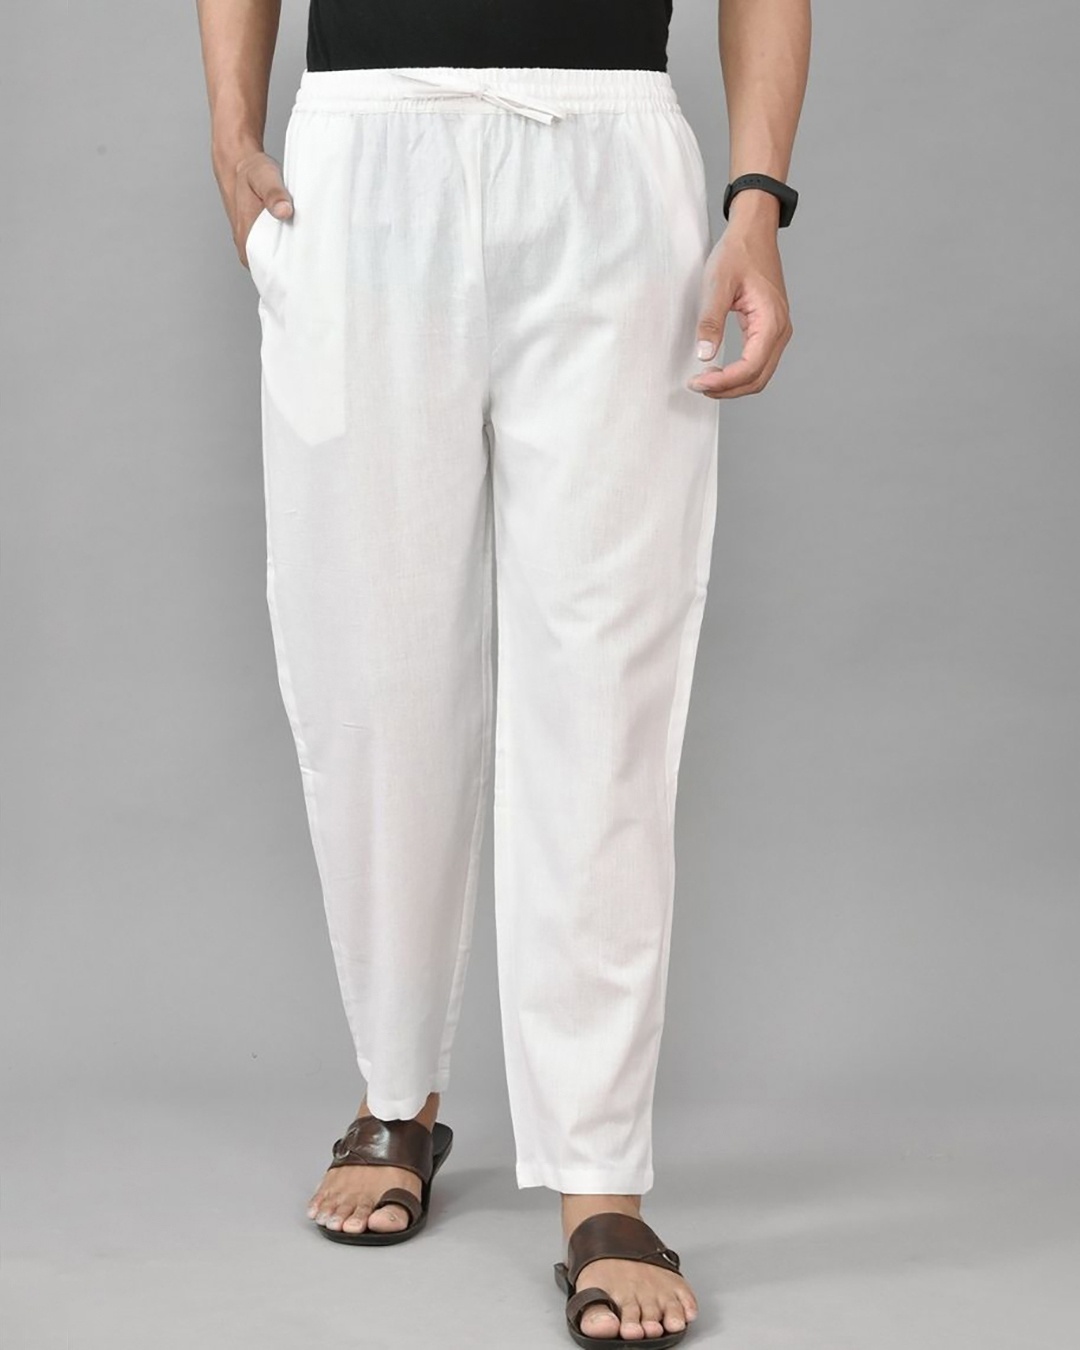 Shop Men's White Golf Pants - Moisture-Wicking and Flexible | Sportsqvest